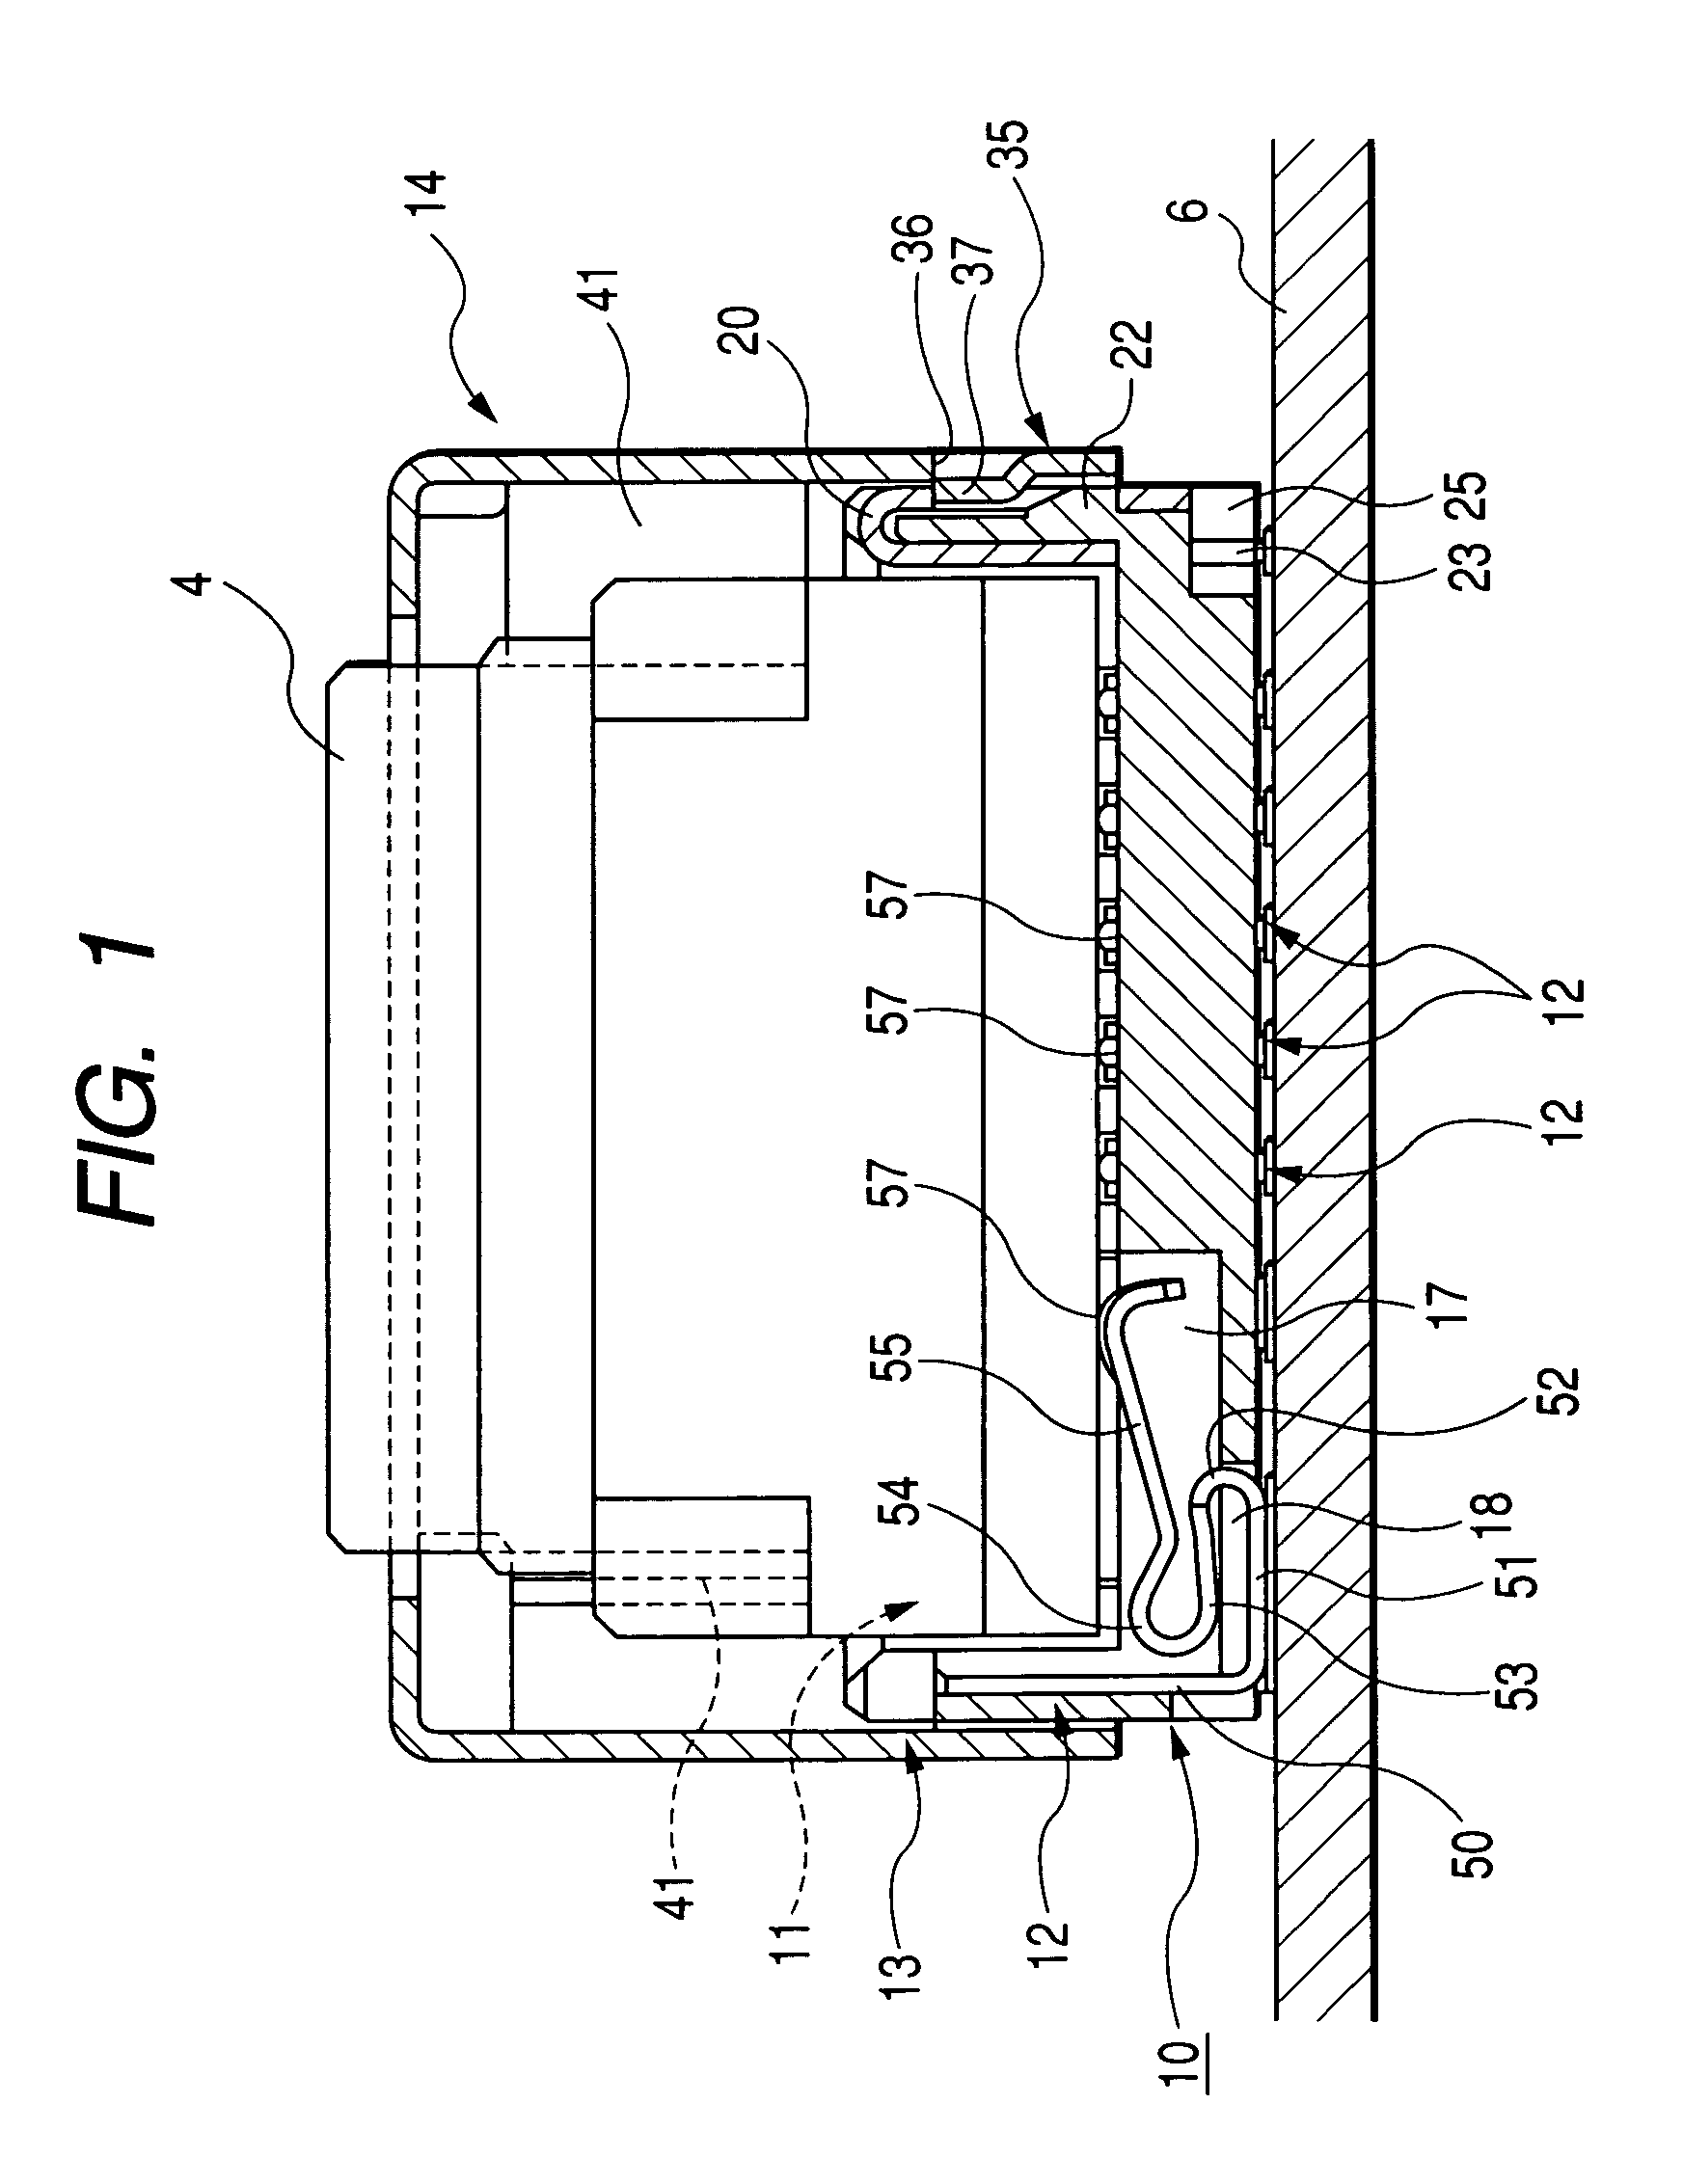 Electronic part-mounting socket